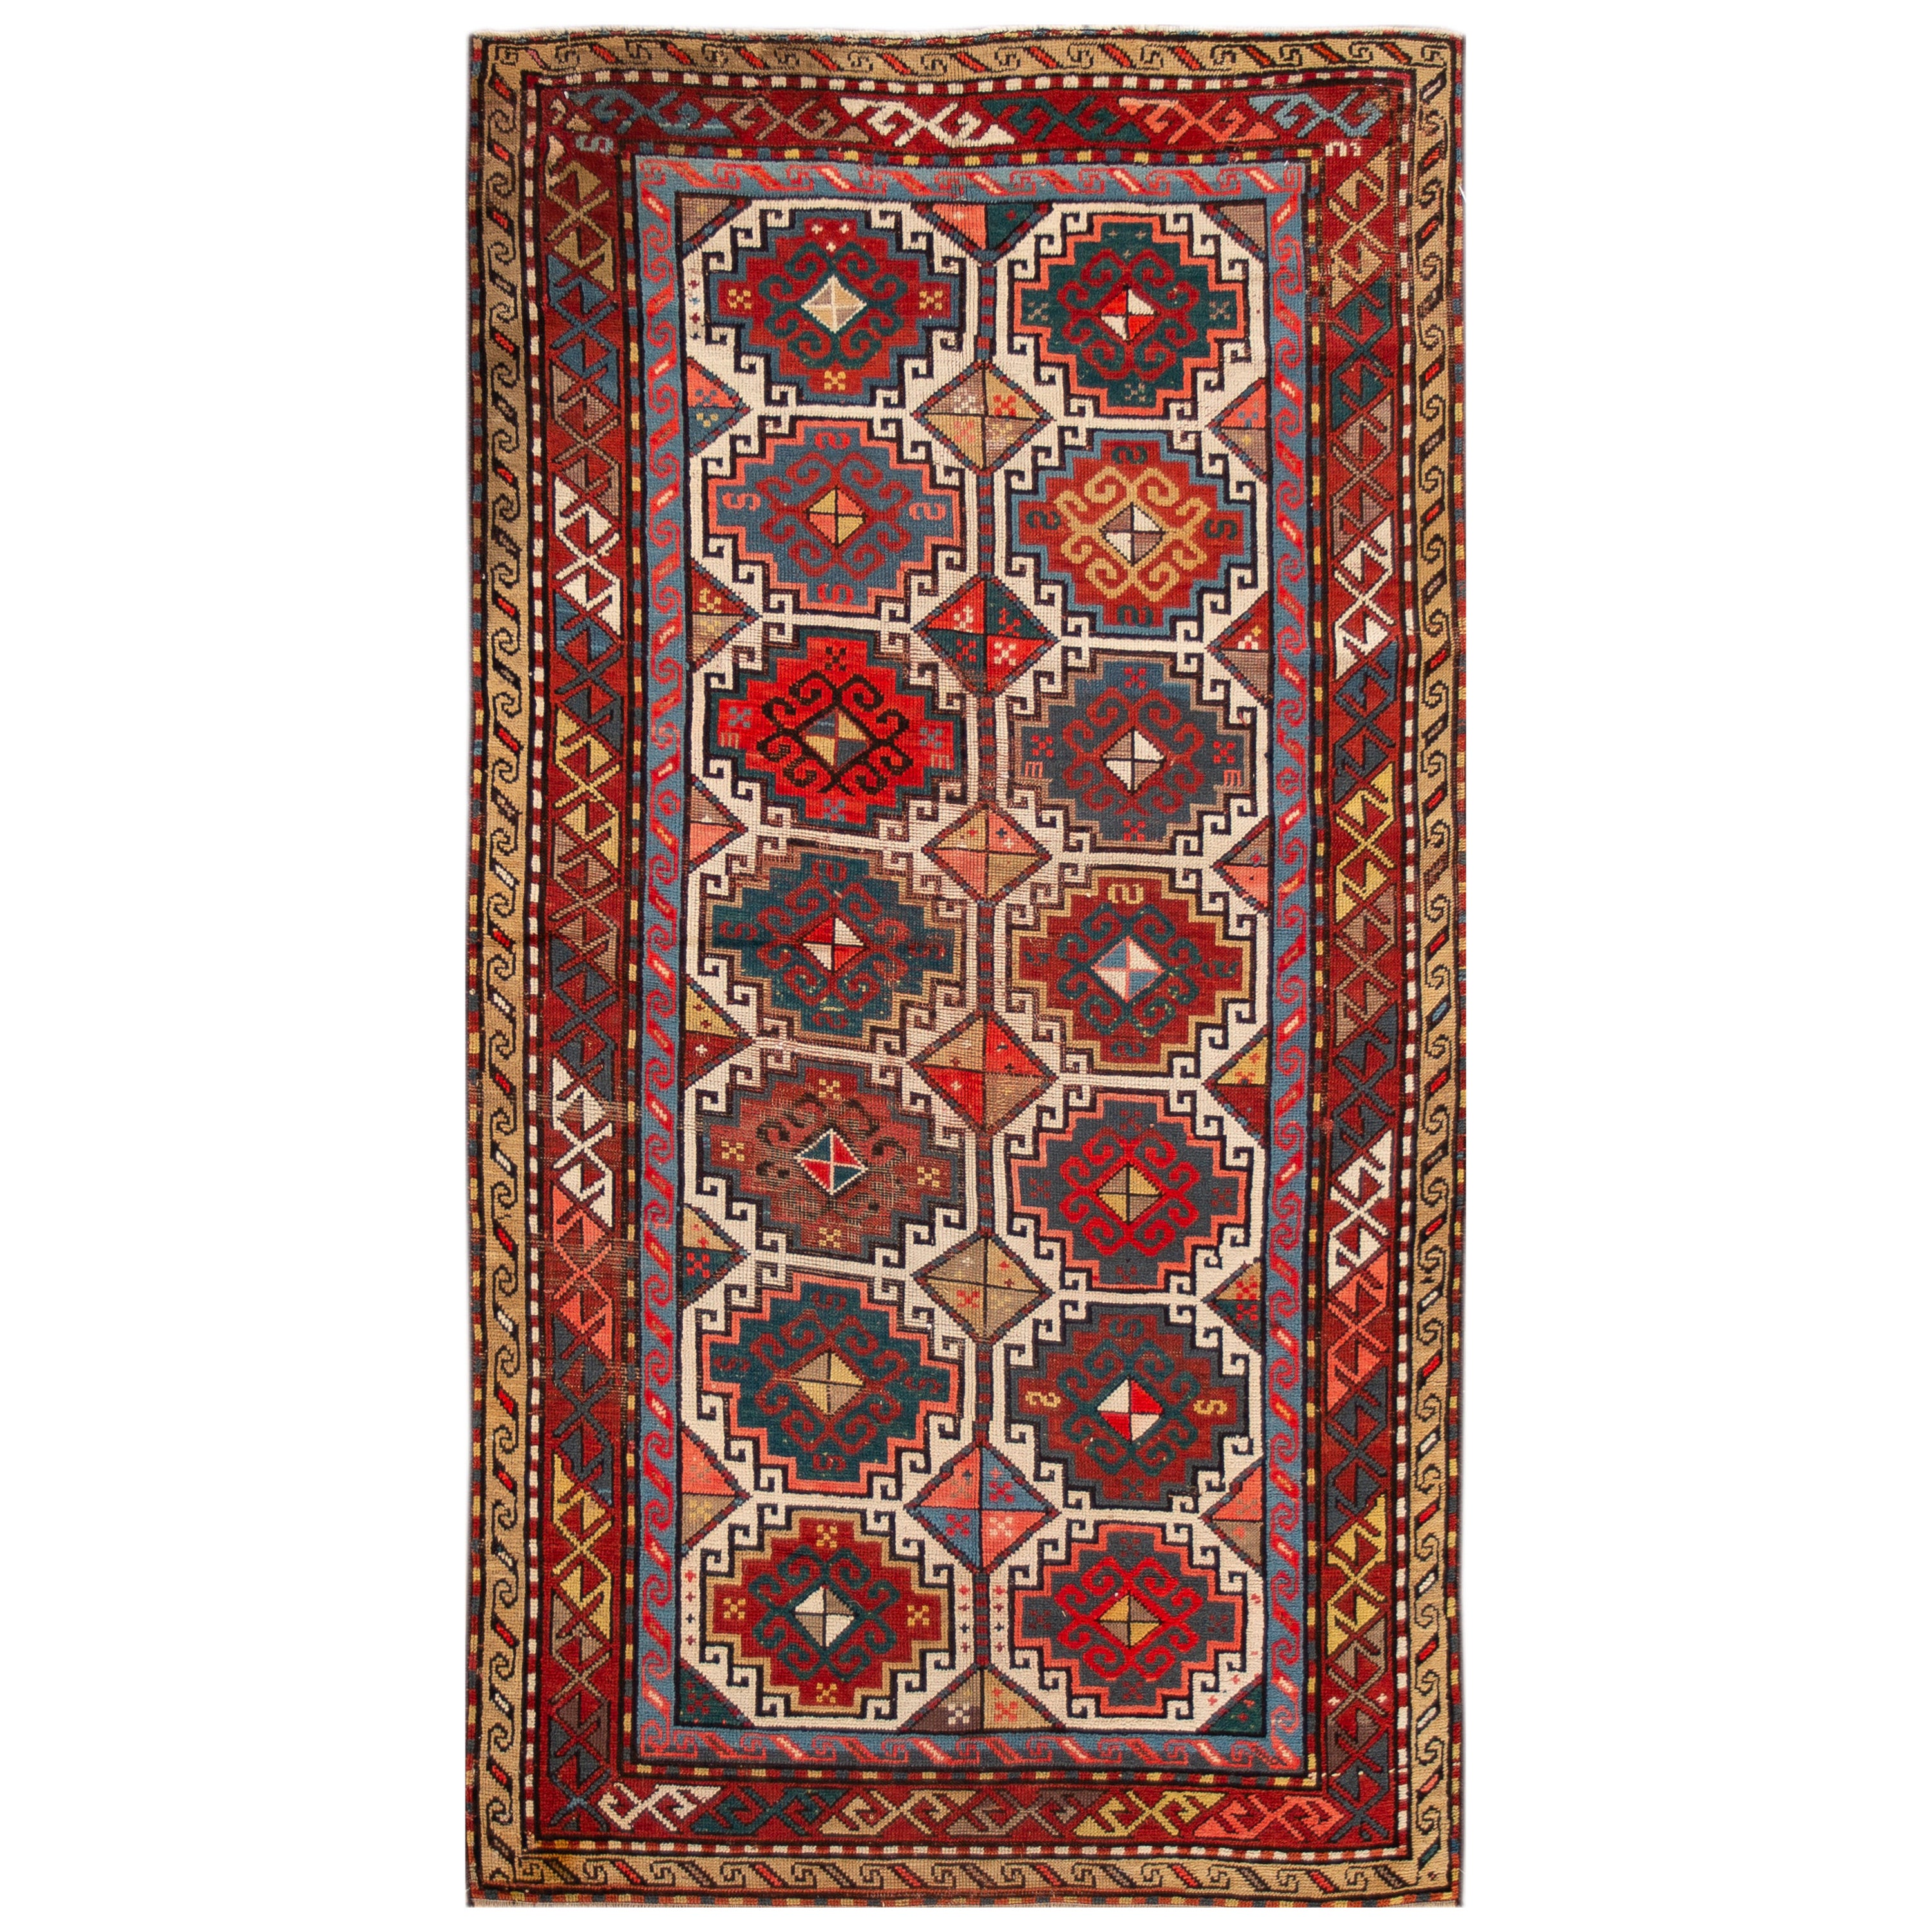 Handmade Antique Kazak Gallery Wool Rug with Multicolor Geometric Pattern